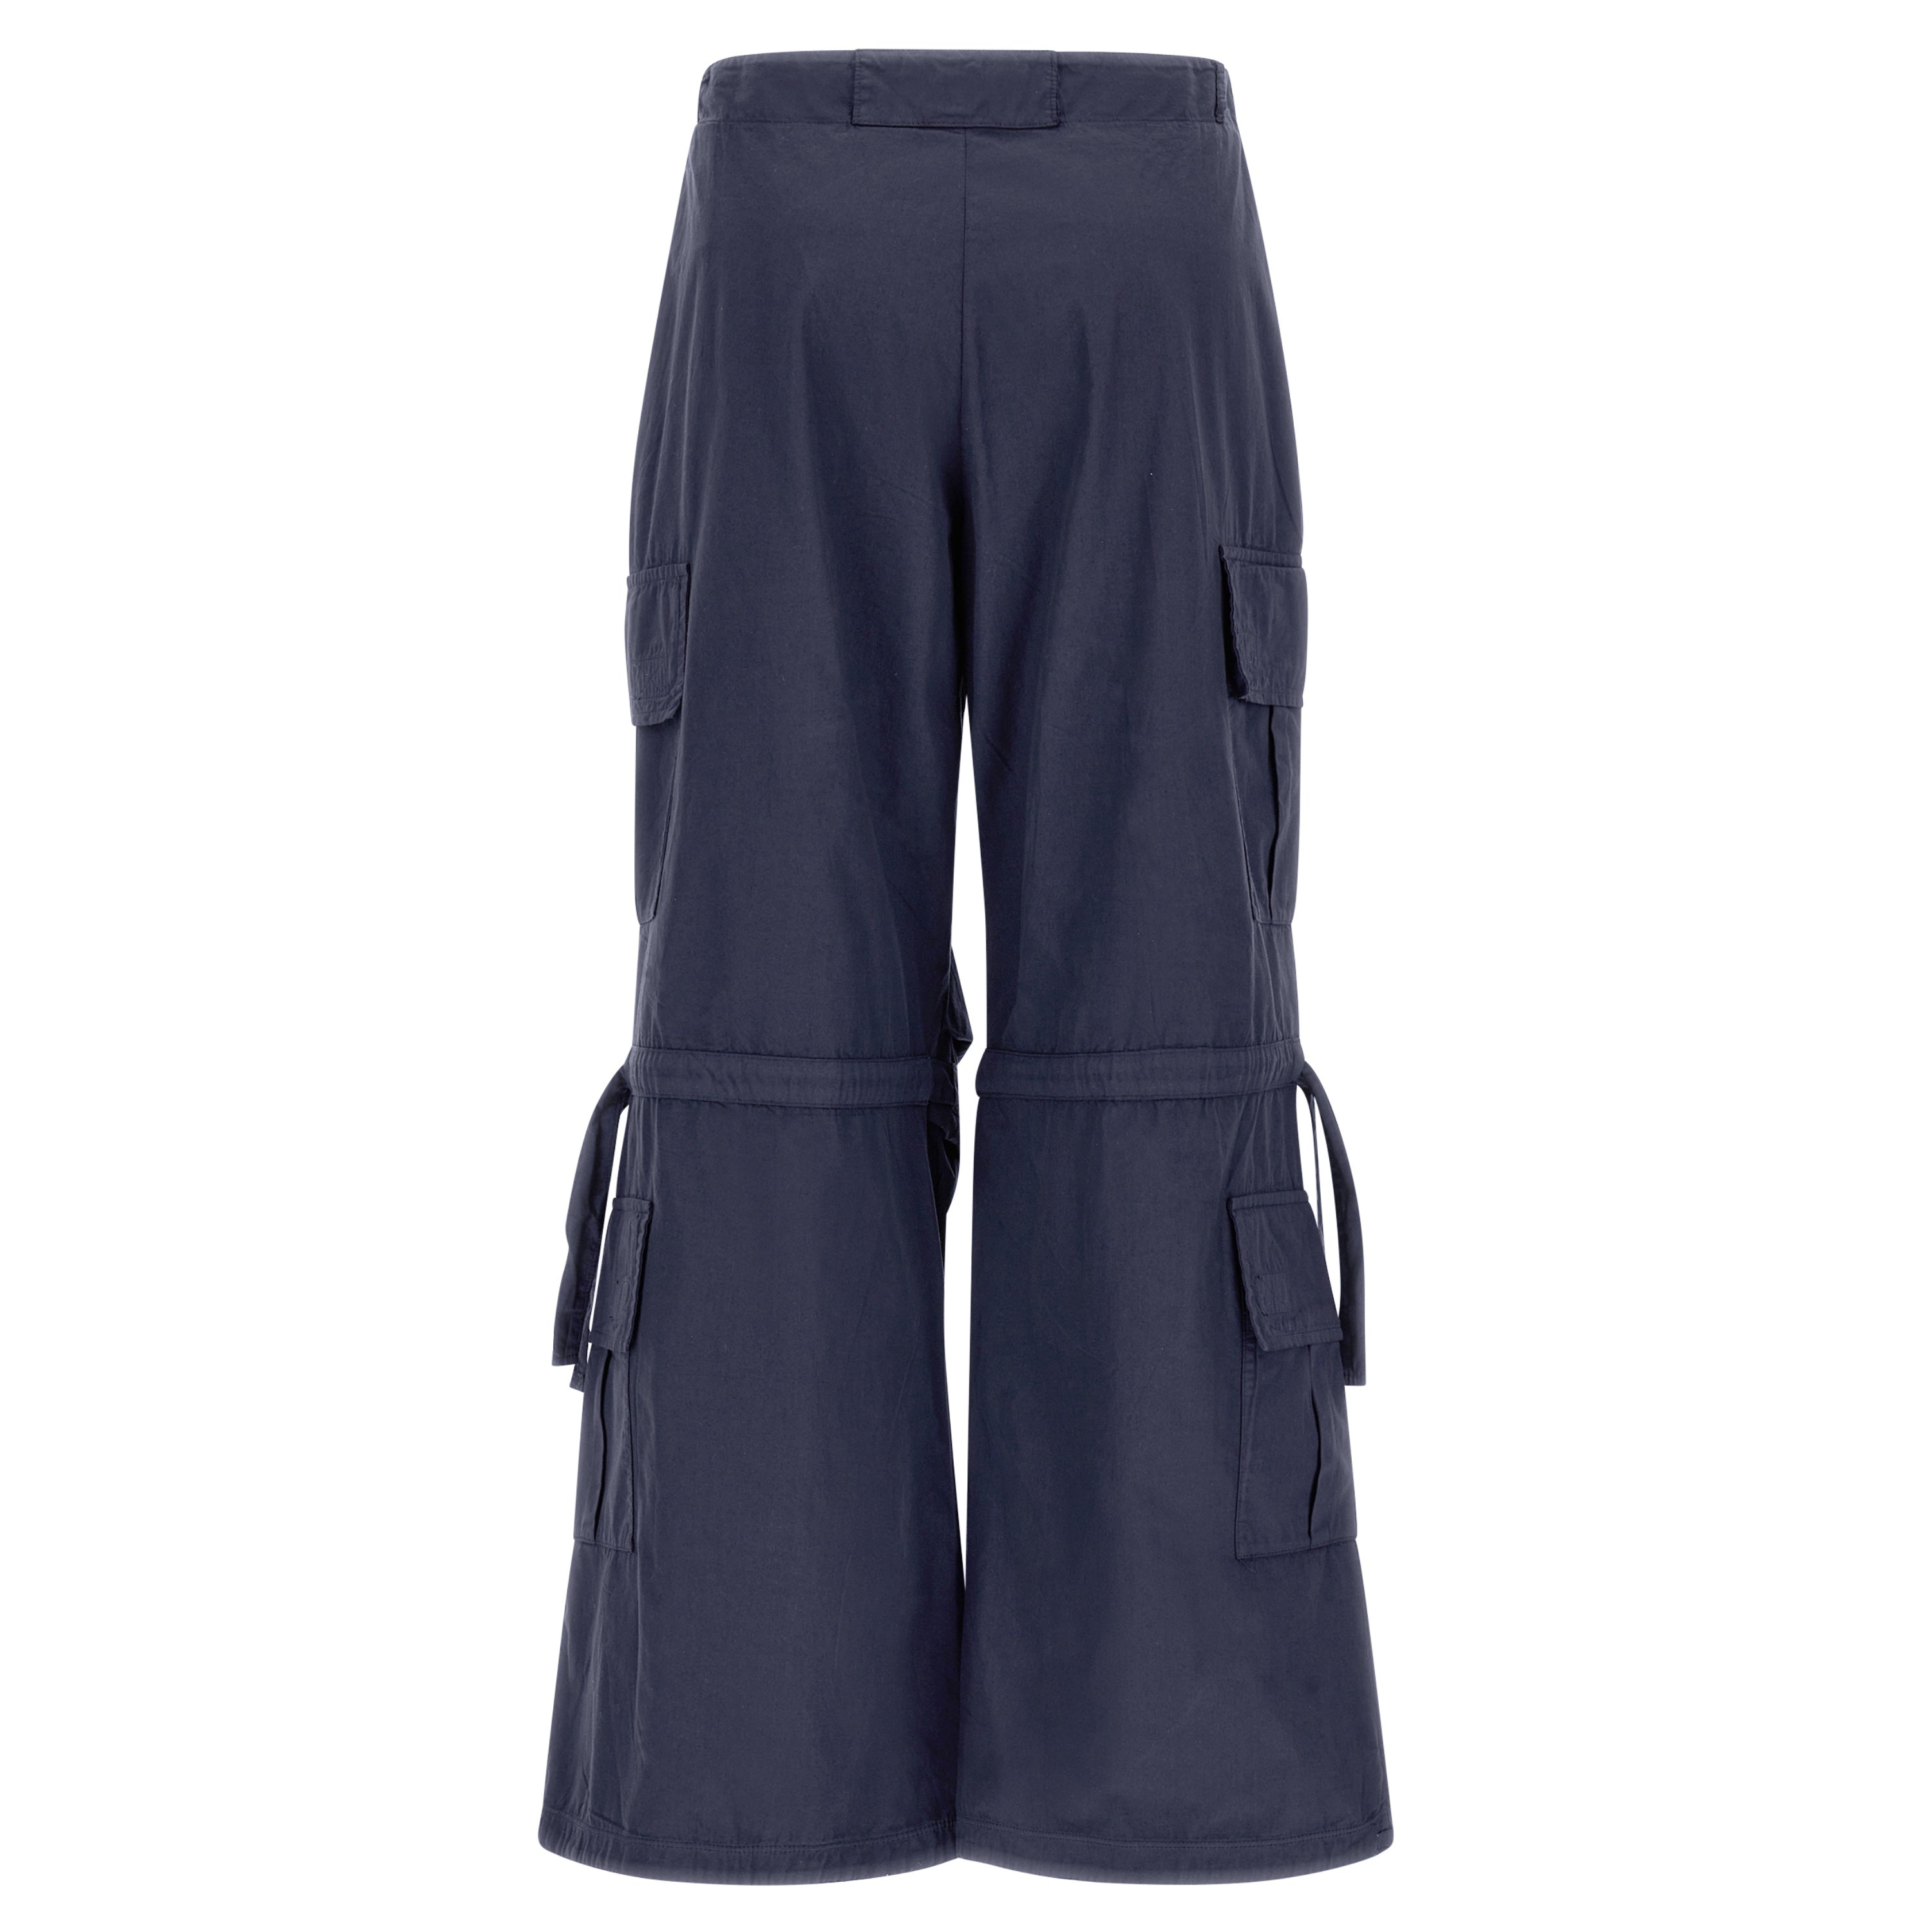 (BRITNEYF301-B94X) Freddy Poplin Cargo Pants with side pockets in Blue